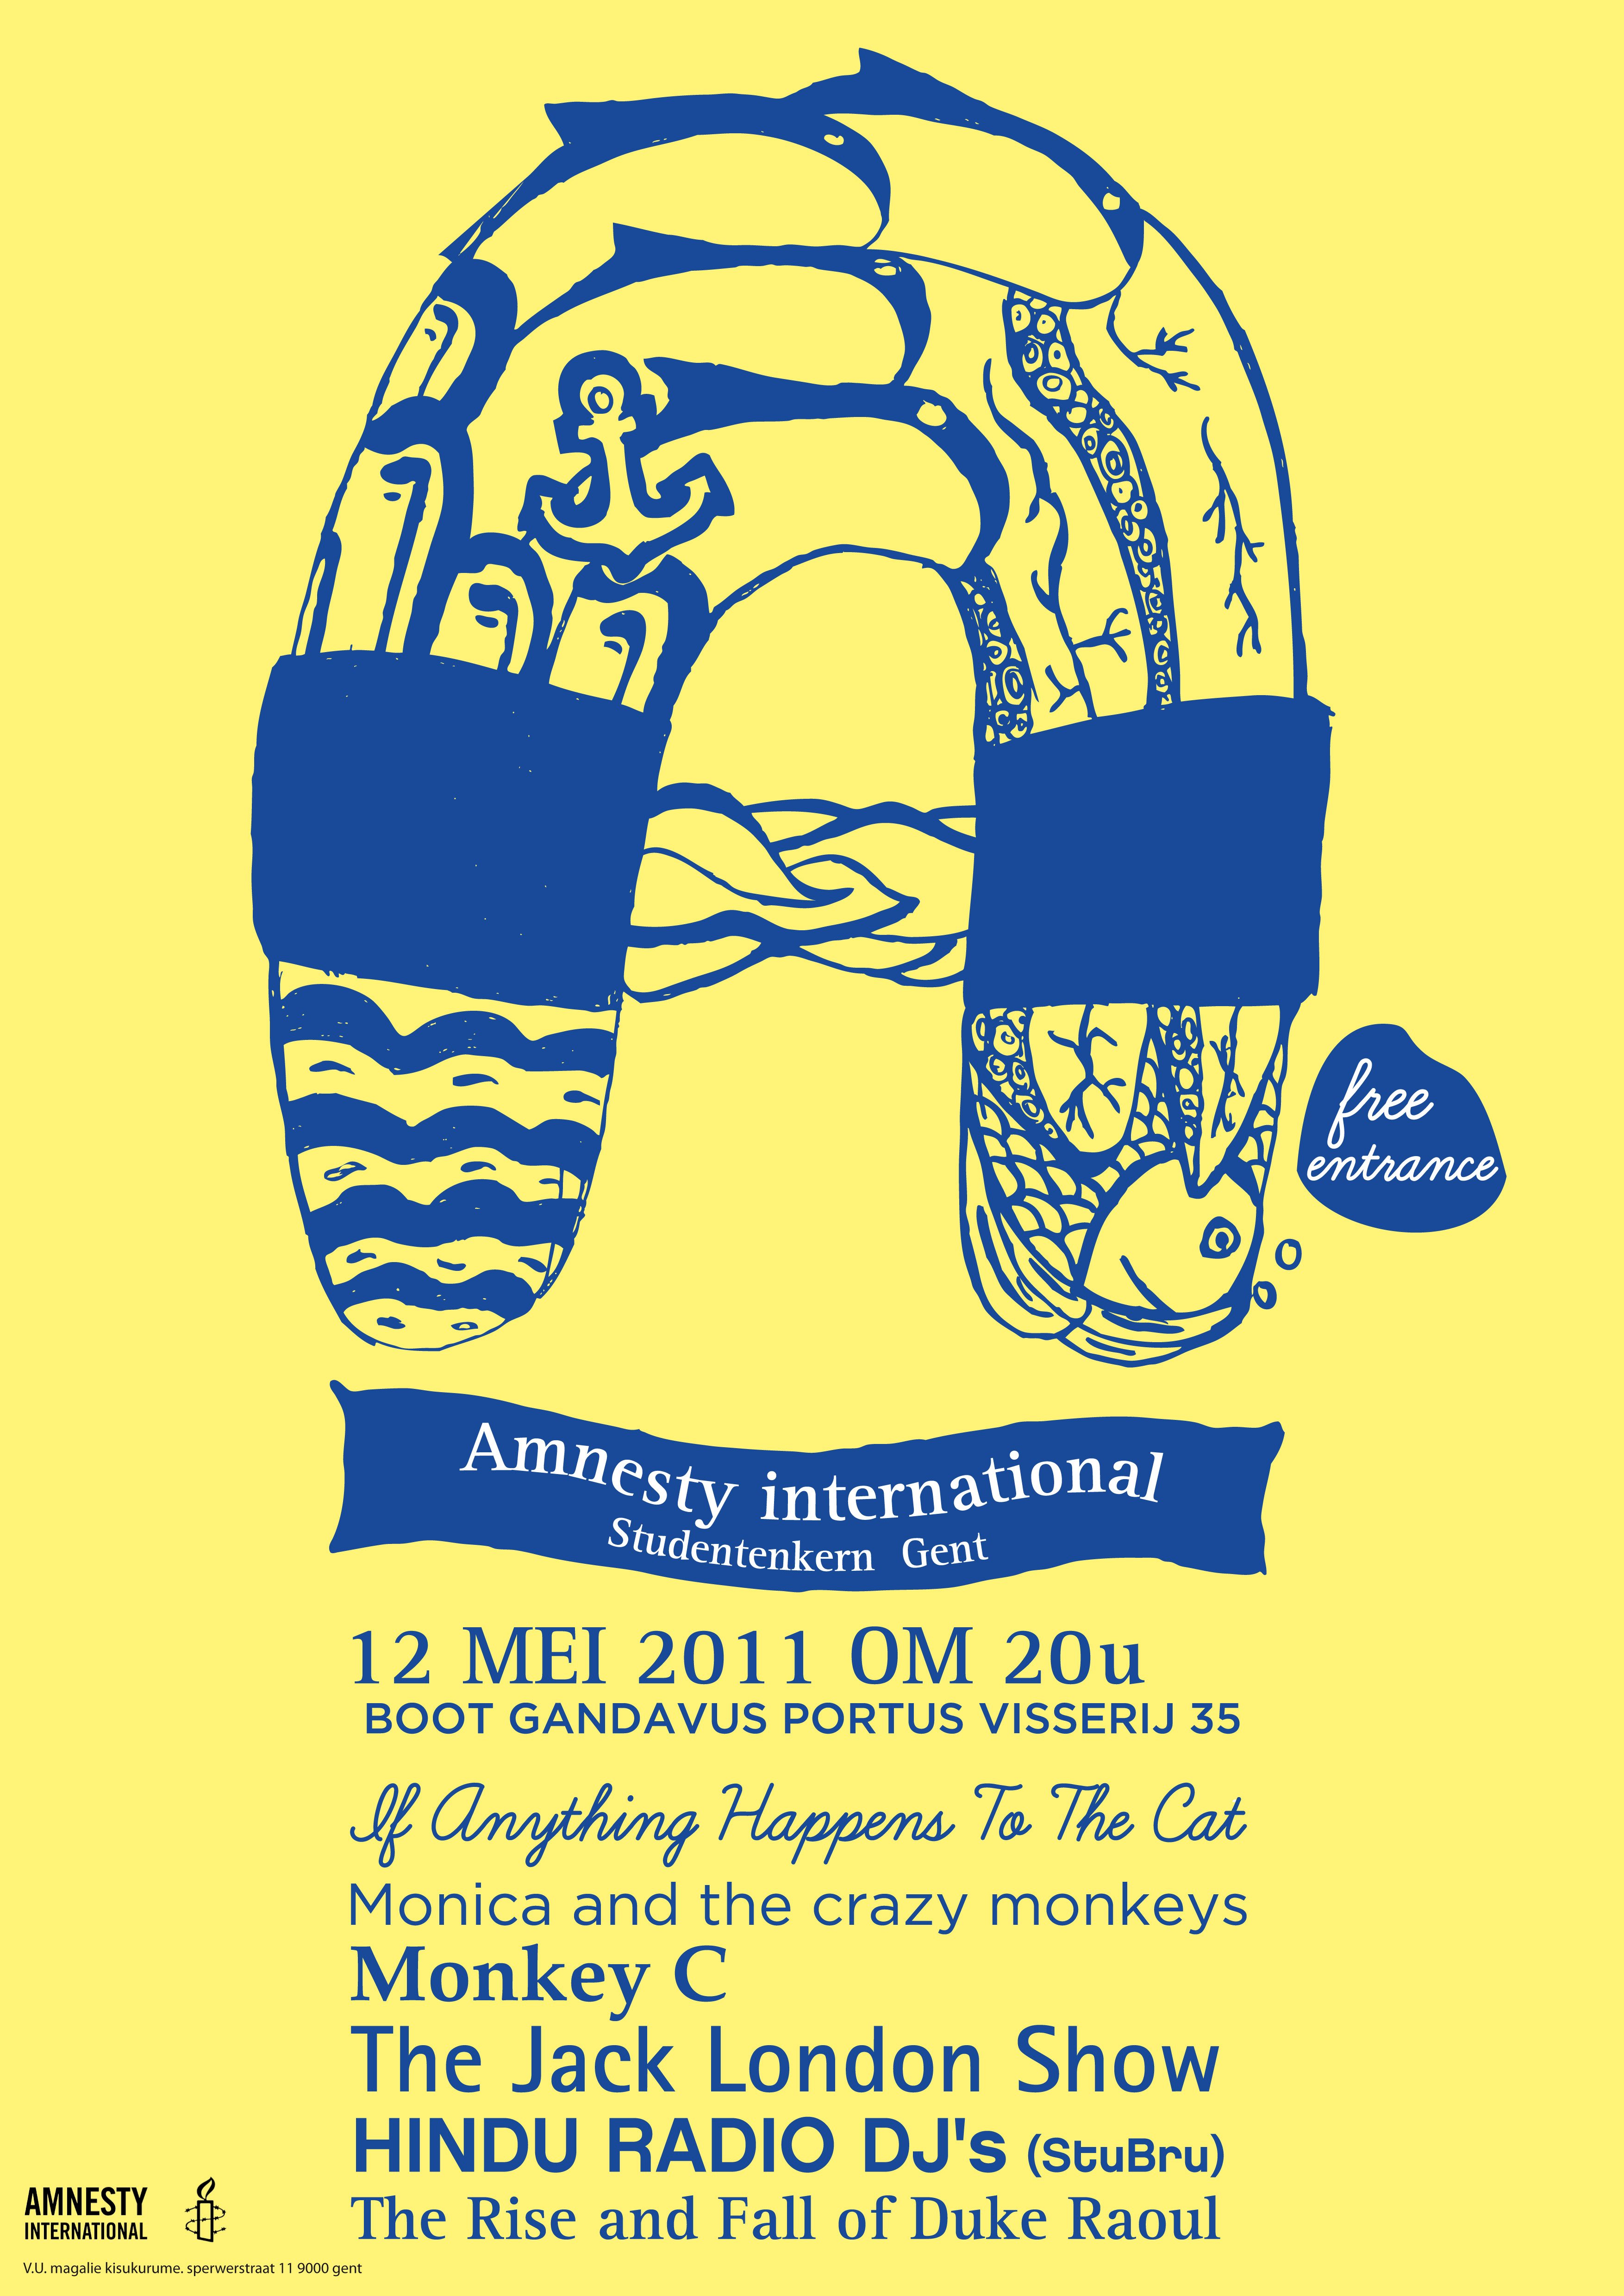 Amnesty International Studentenkern Gent - Bootfeest en Gandavus Portus  (Gent) el 12 May 2011 | Last.fm